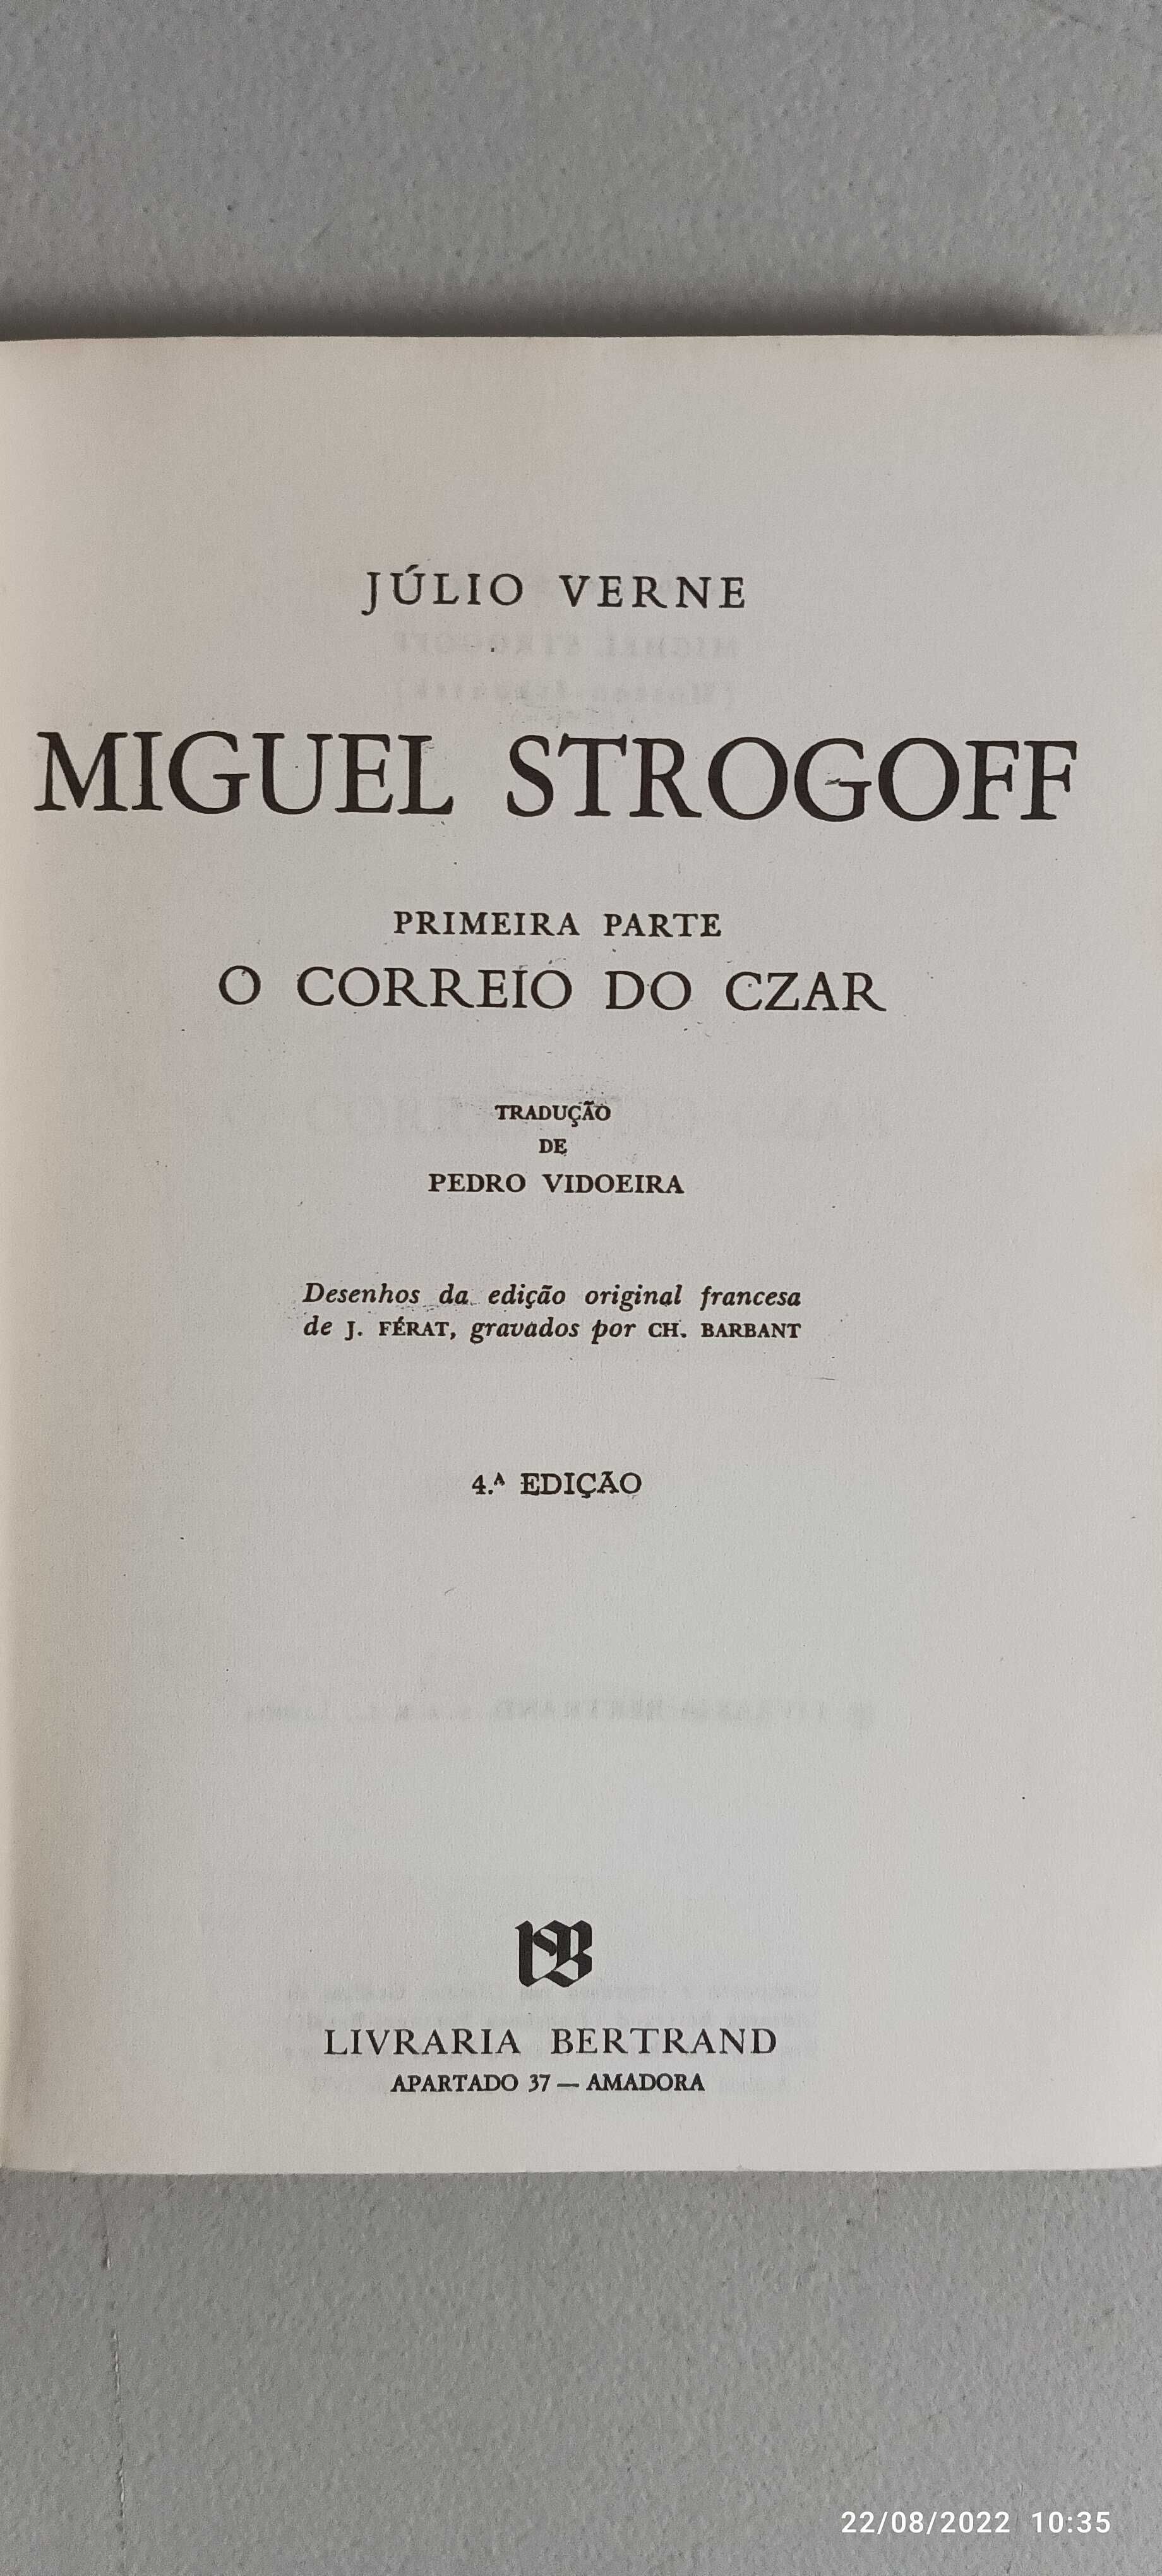 Livro Pa-3 -Júlio Verne  - Miguel Sterogooff Vol-1